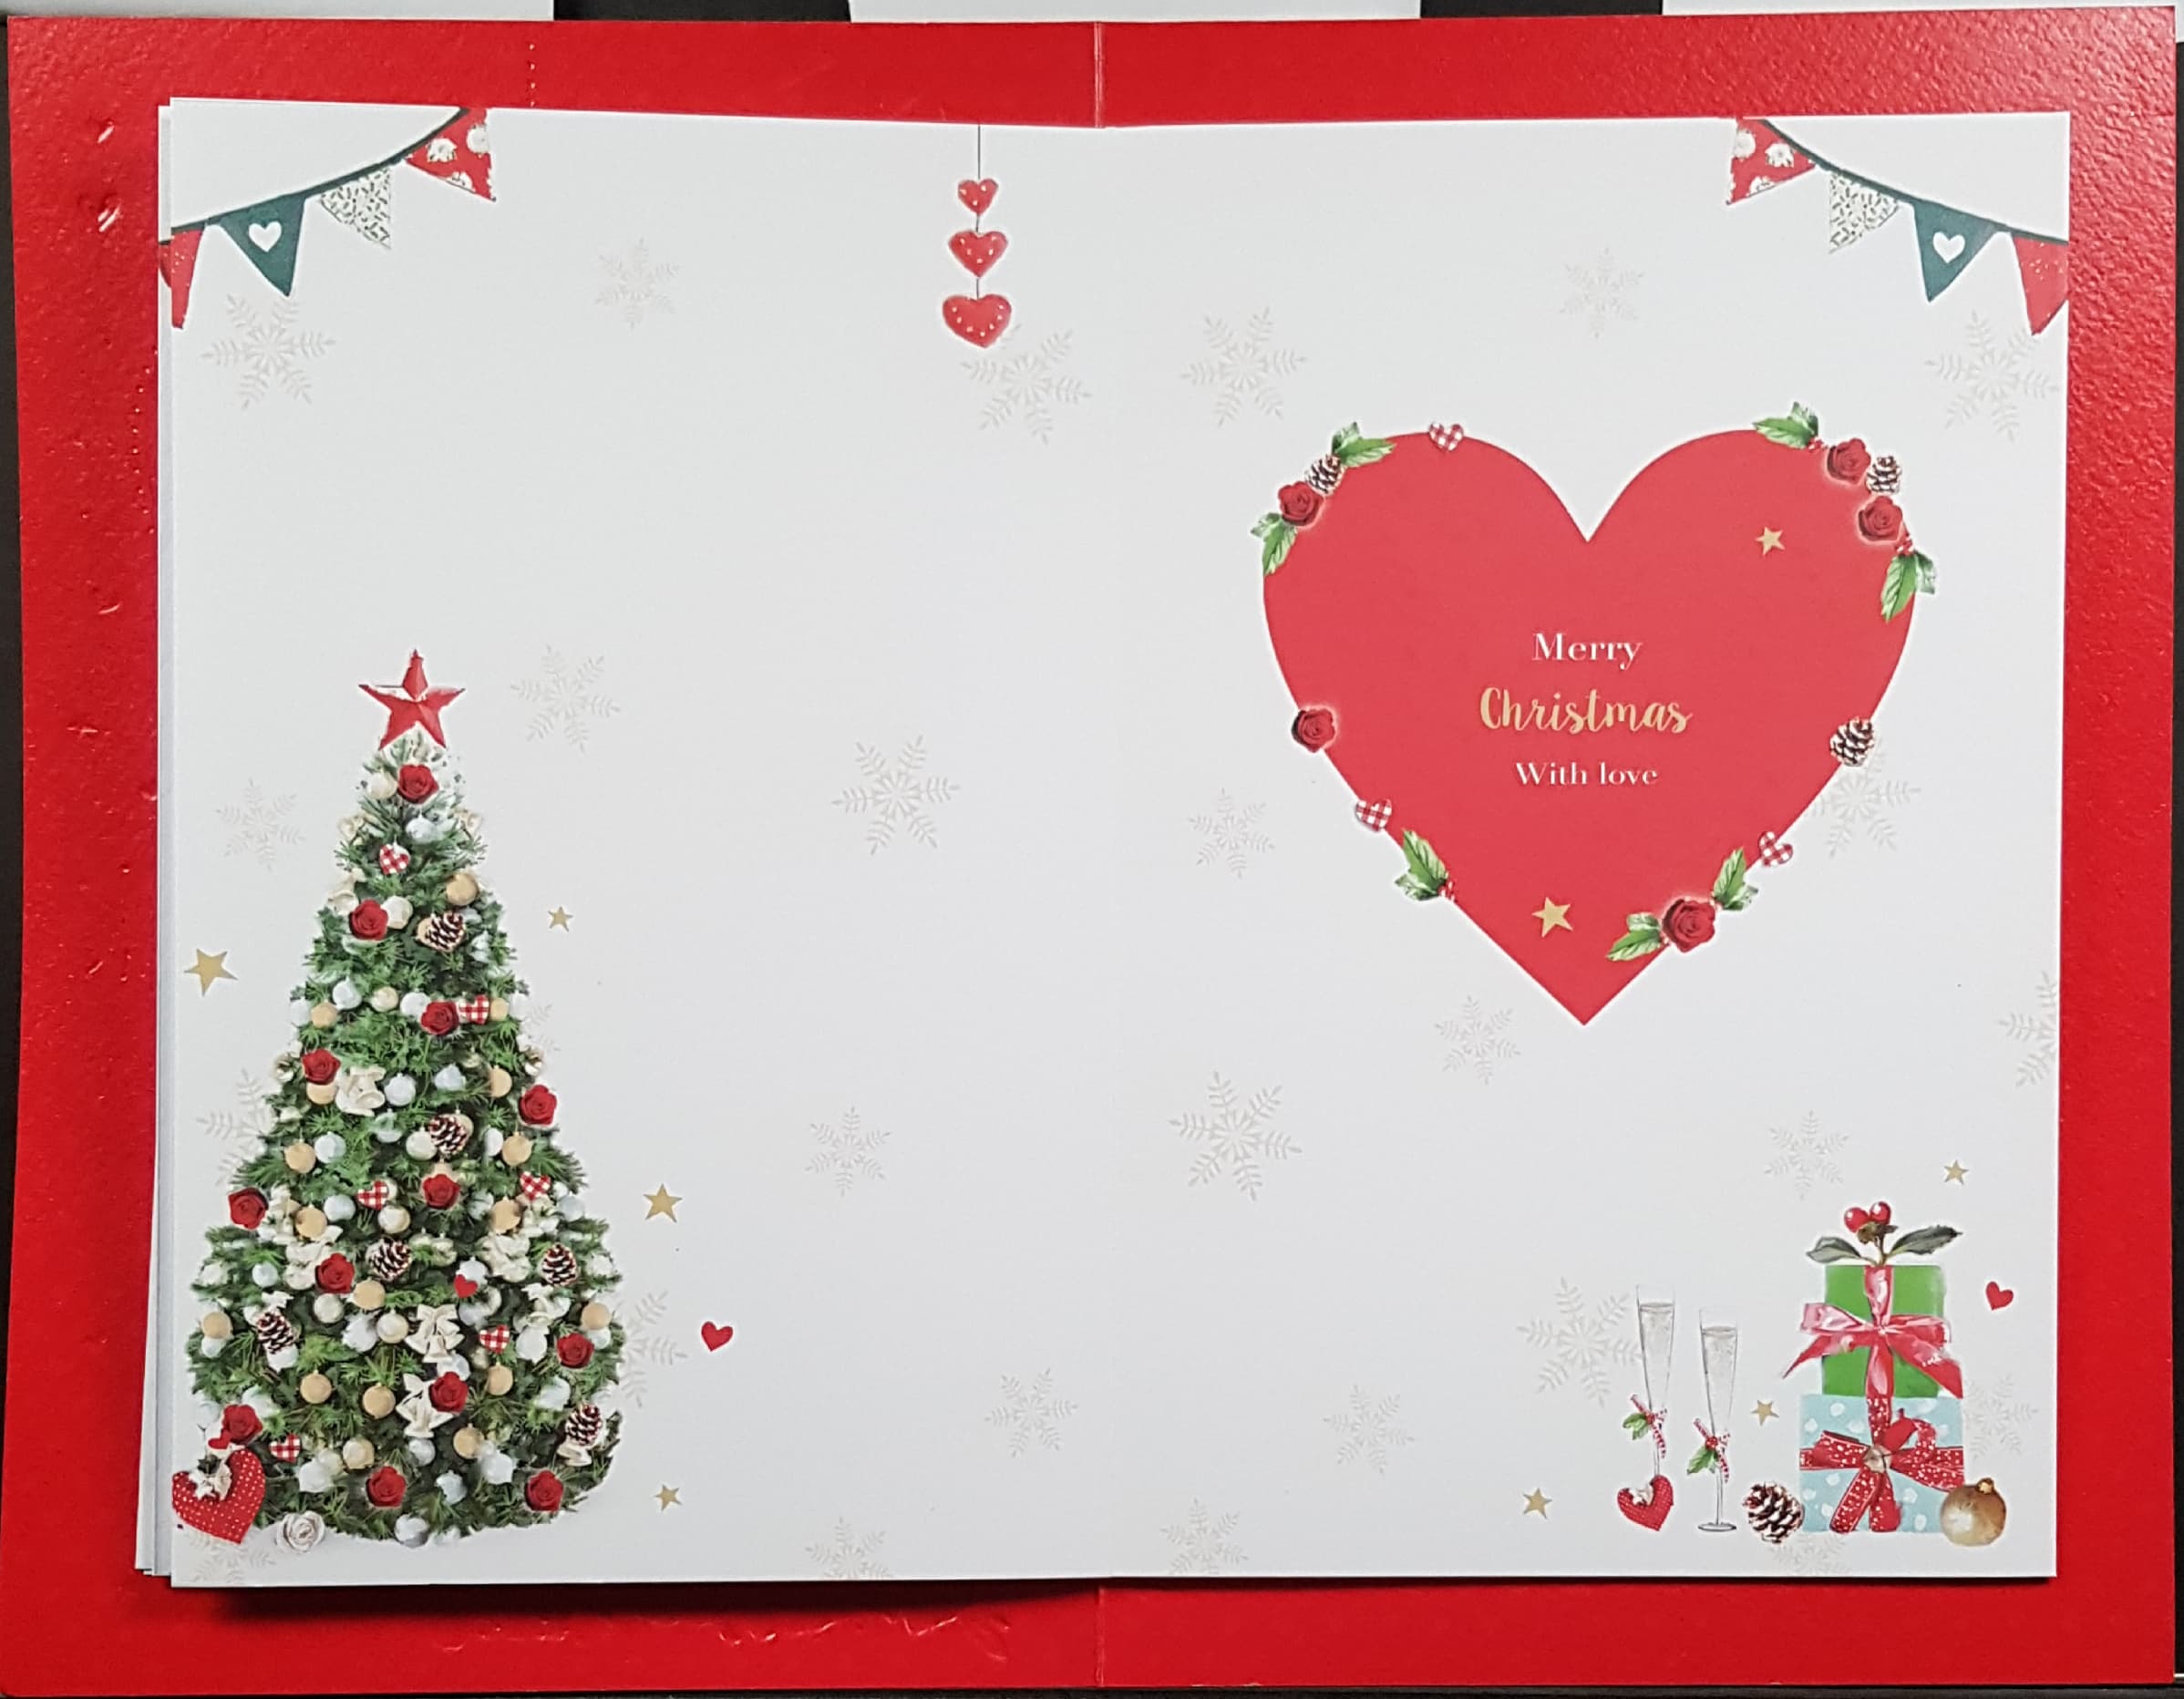 One I Love Christmas Card - Heart And Tree